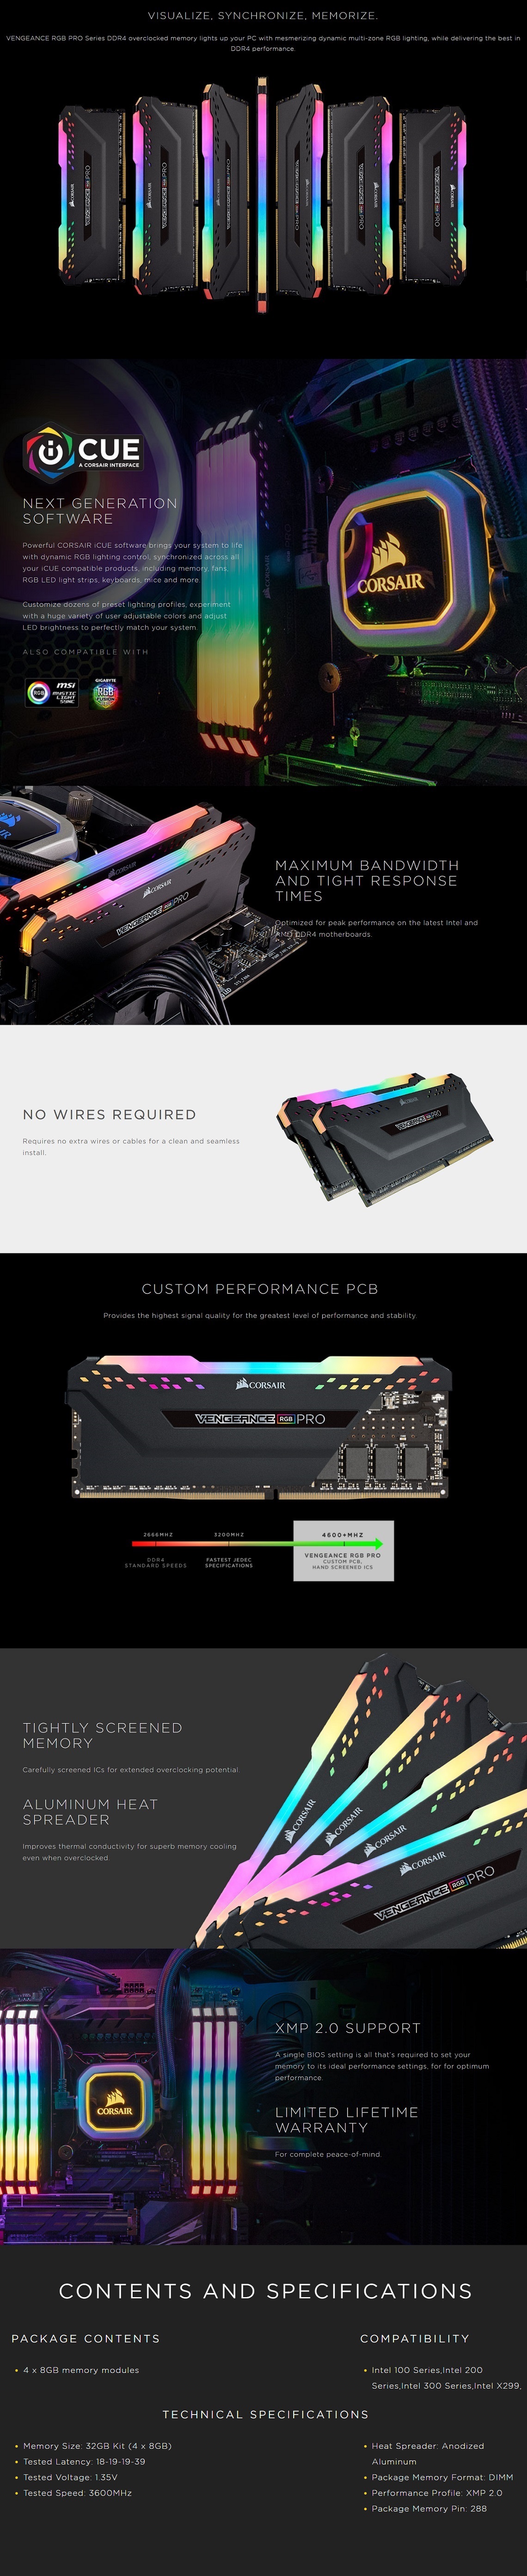 Corsair Vengeance RGB PRO 32GB (4x8GB) DDR4 3600MHz C18 Desktop Gaming Memory